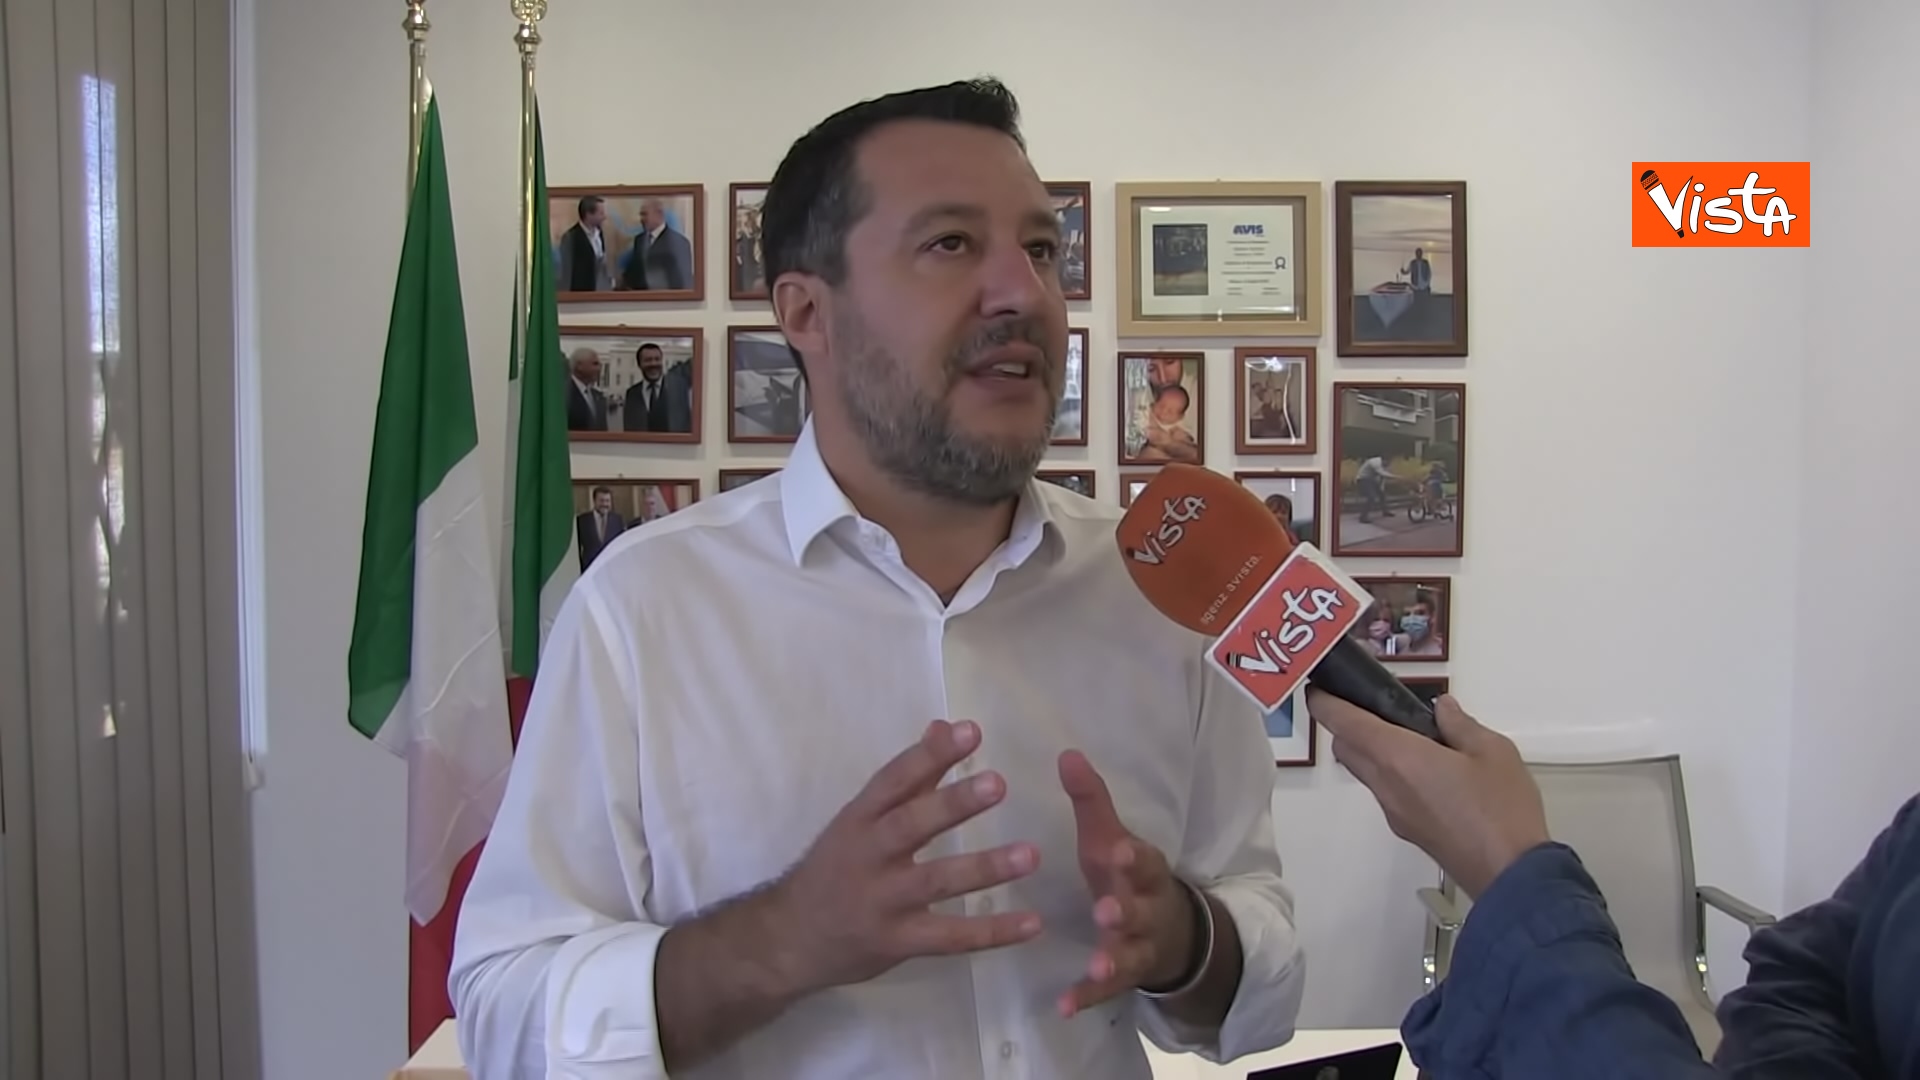 L'intervista al Segretario della Lega Salvini del direttore di Vista Jakhnagiev